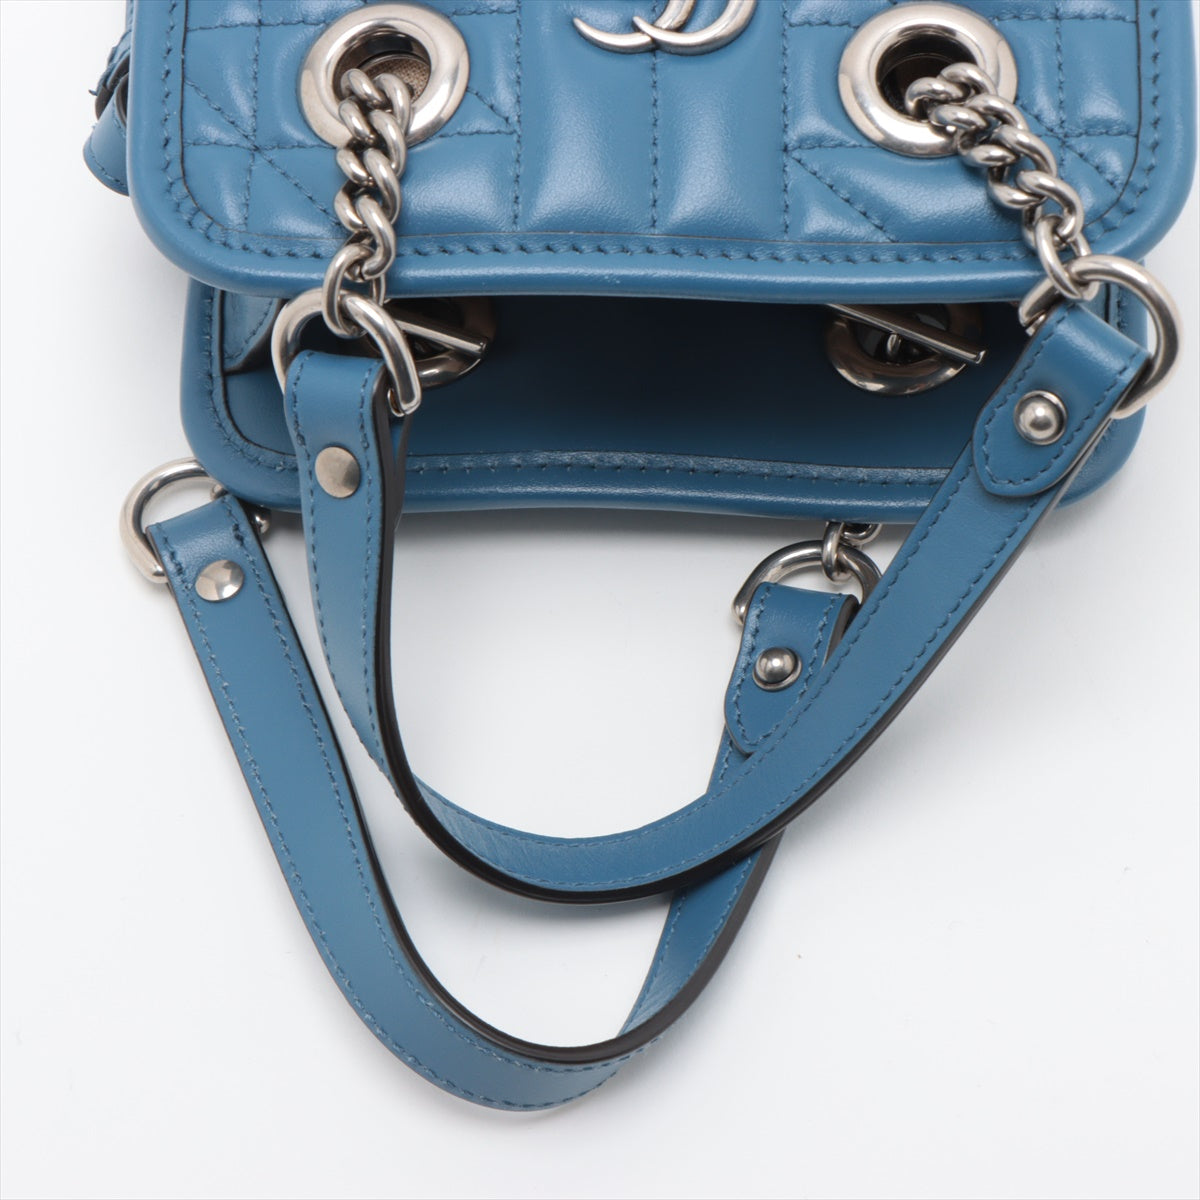 Gucci GG Marmont Leather Shoulder bag Blue 696123